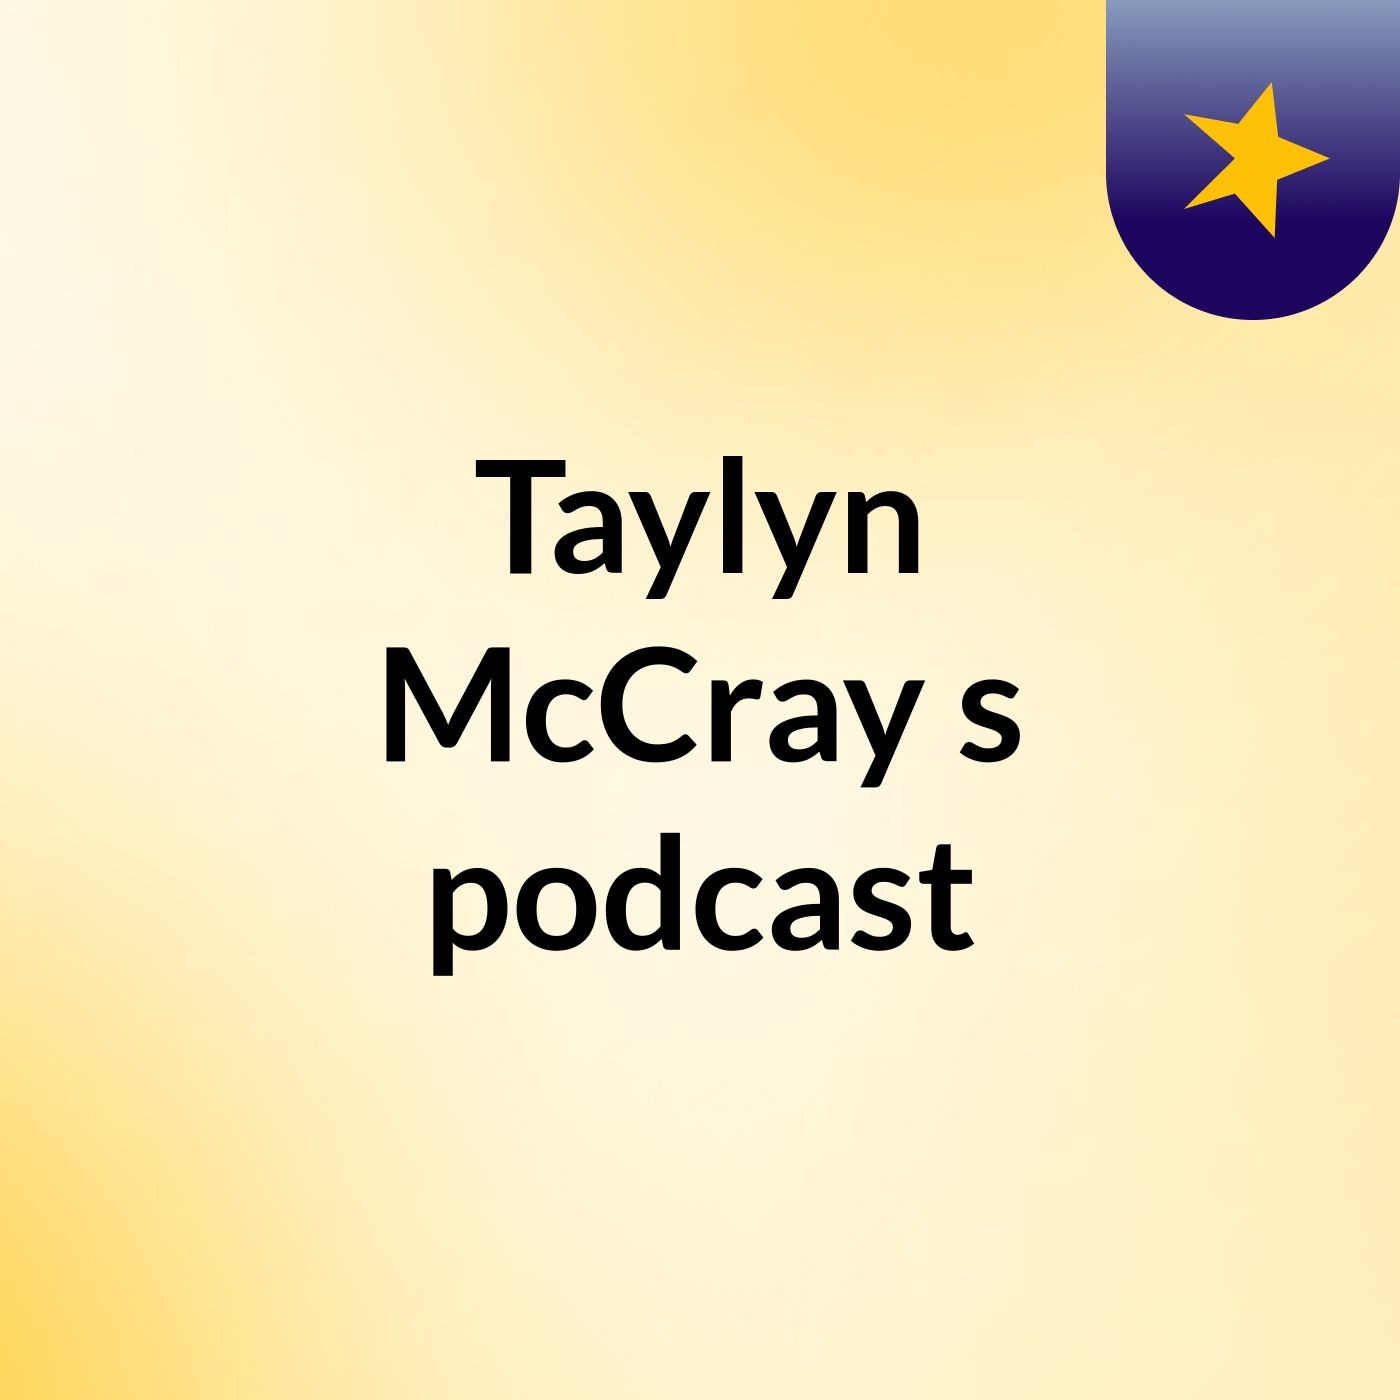 Taylyn McCray's podcast